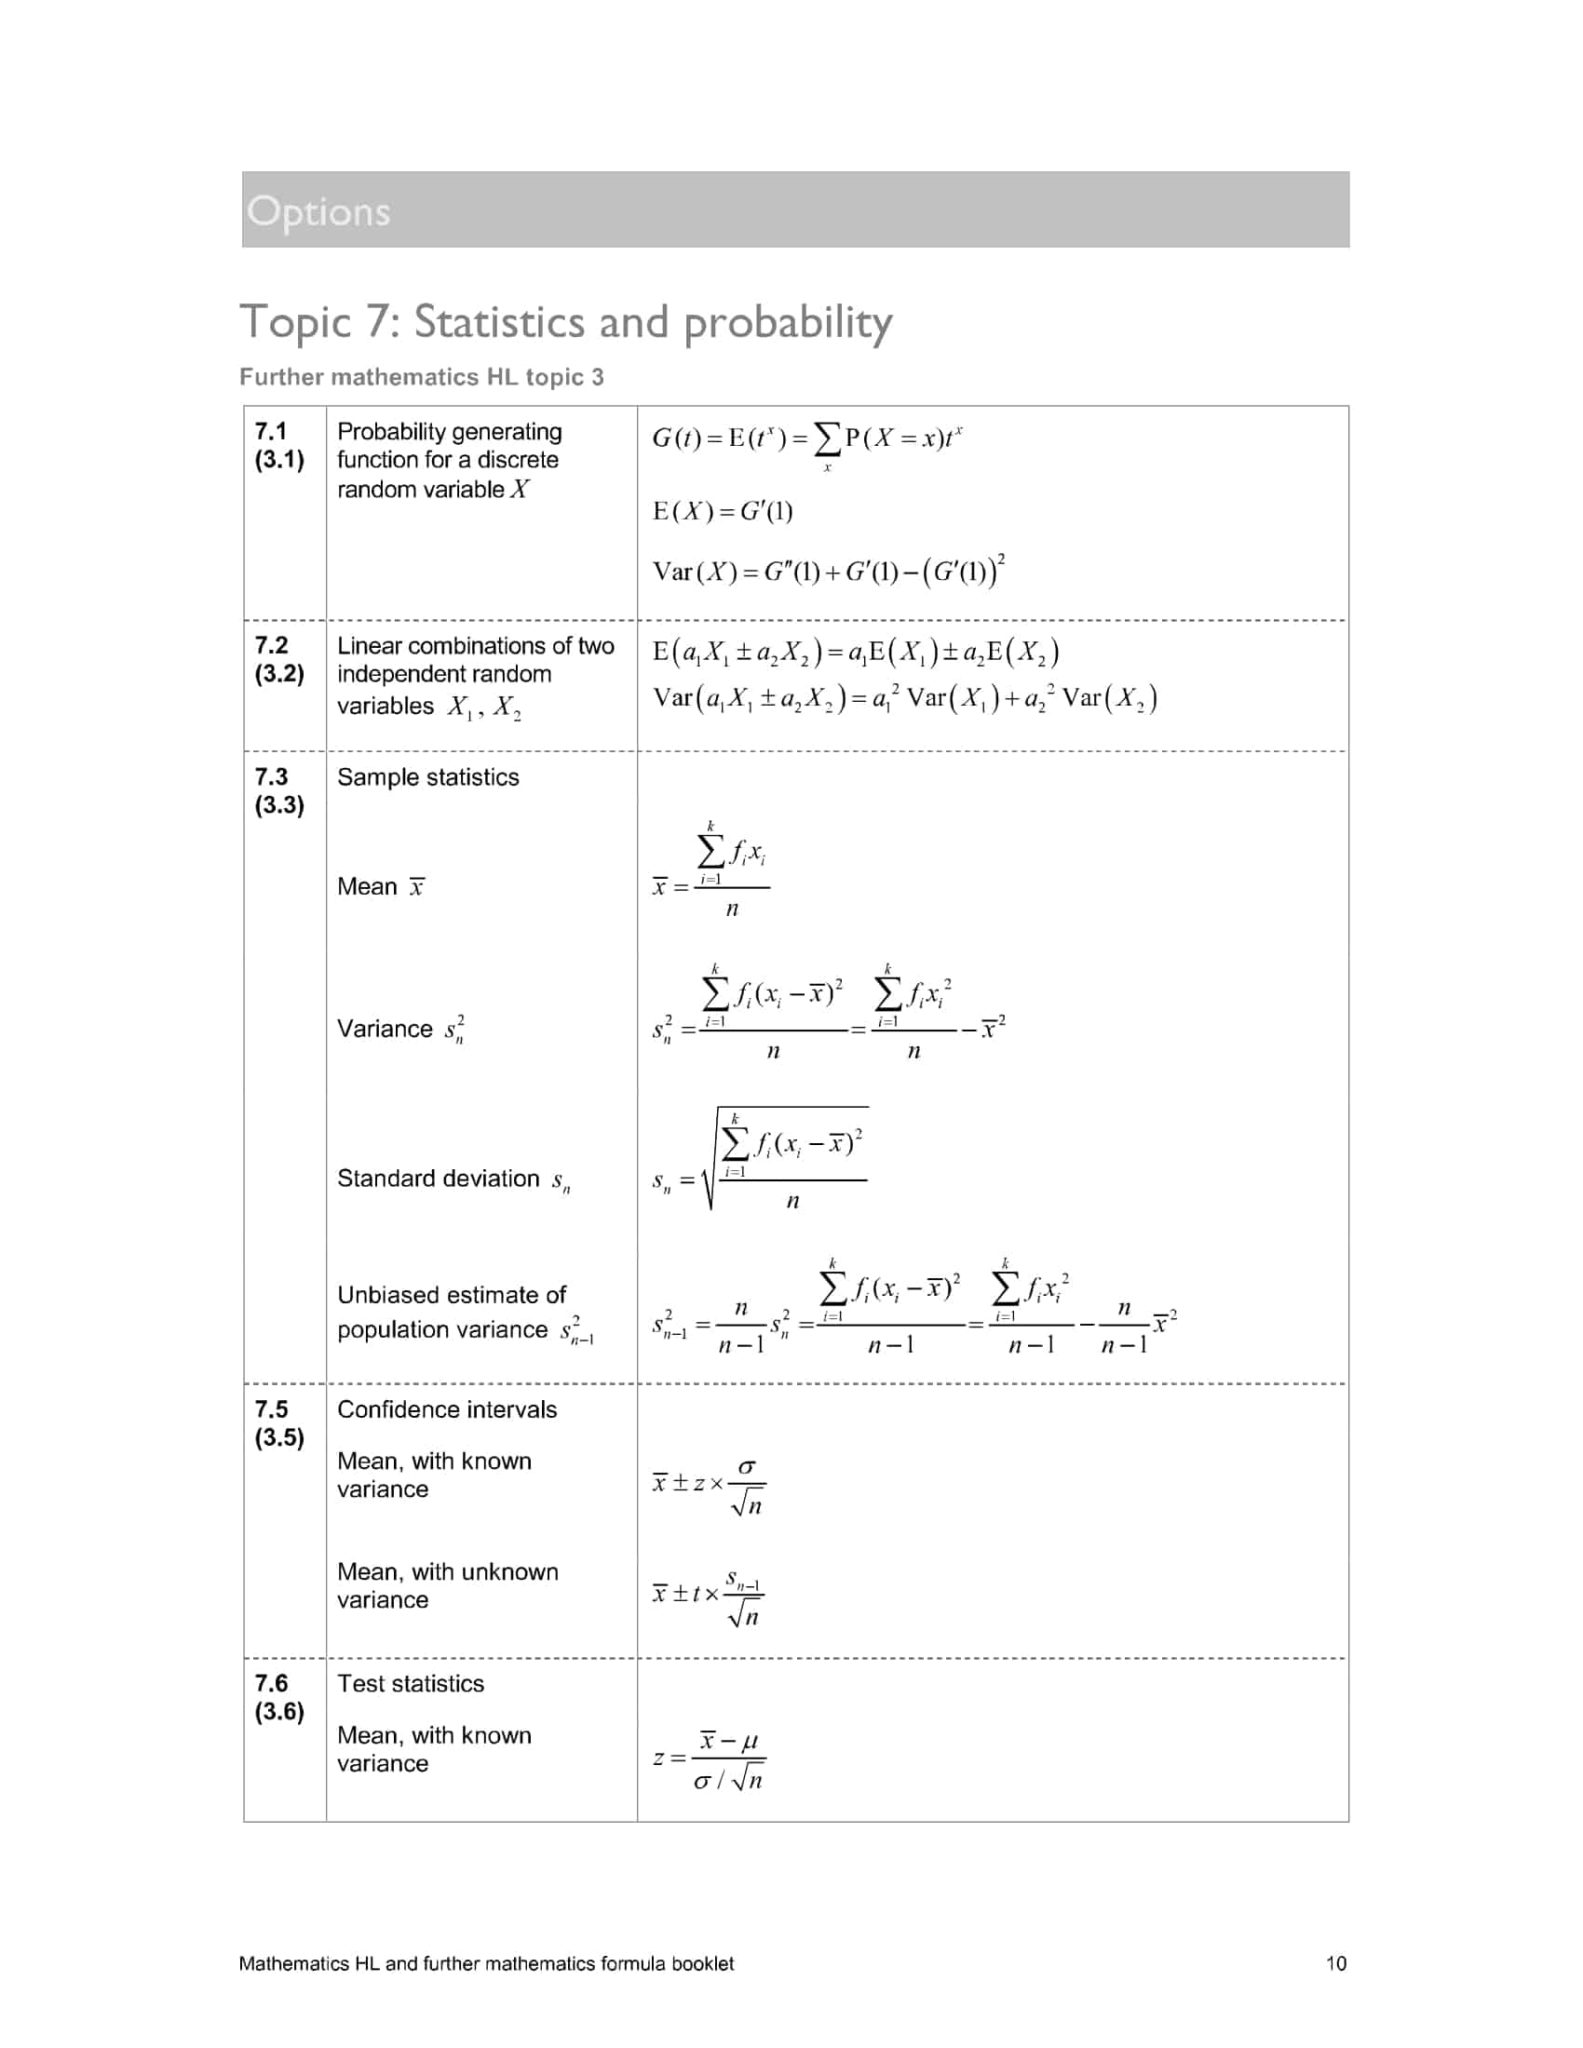 ib math hl formula booklet